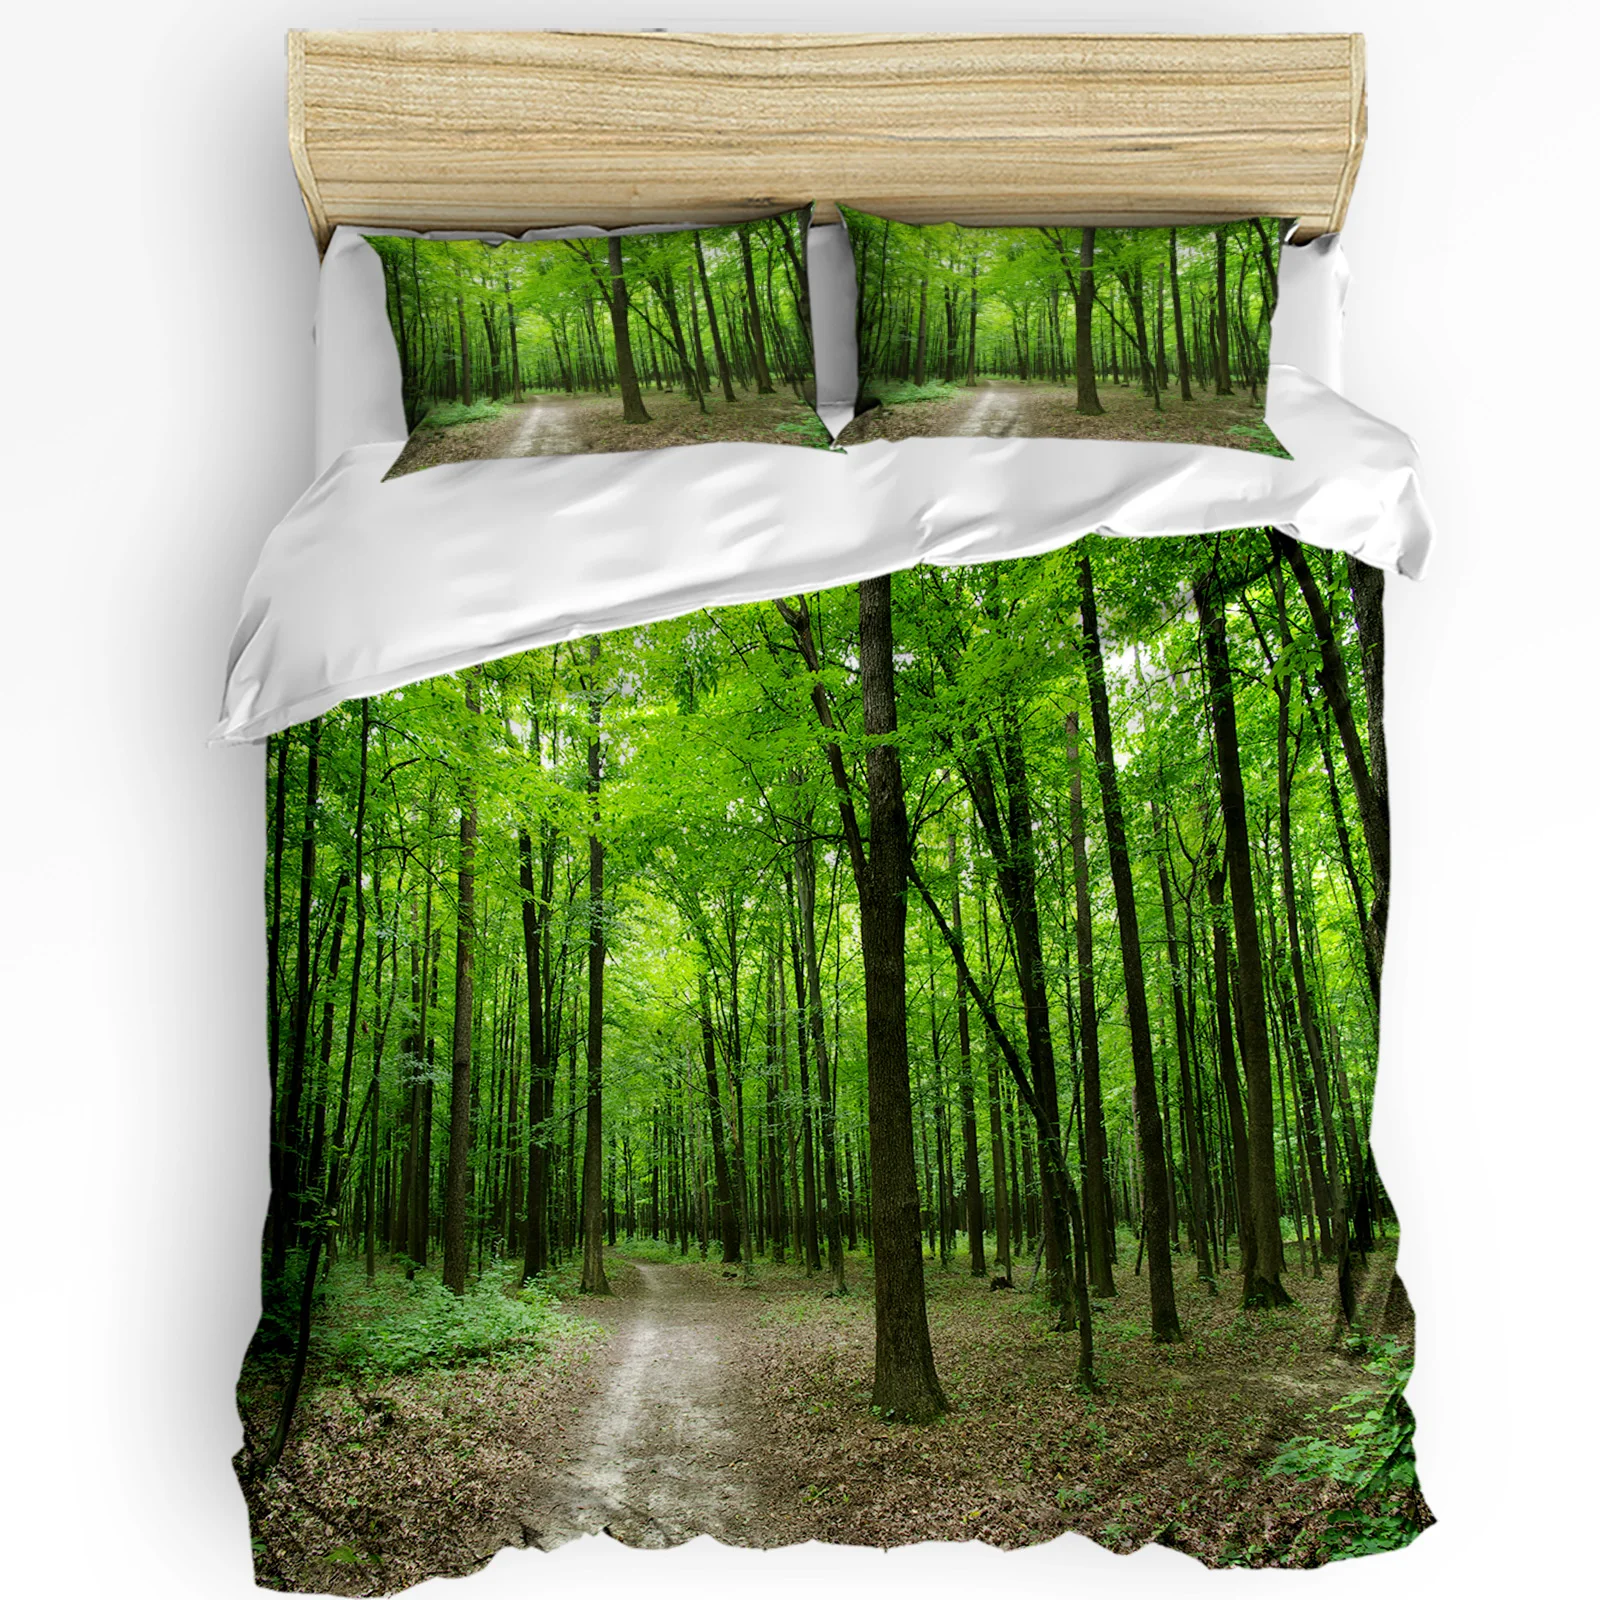 

3pcs Bedding Set Green Forest Nature Home Textile Duvet Cover Pillow Case Boy Kid Teen Girl Bedding Covers Set